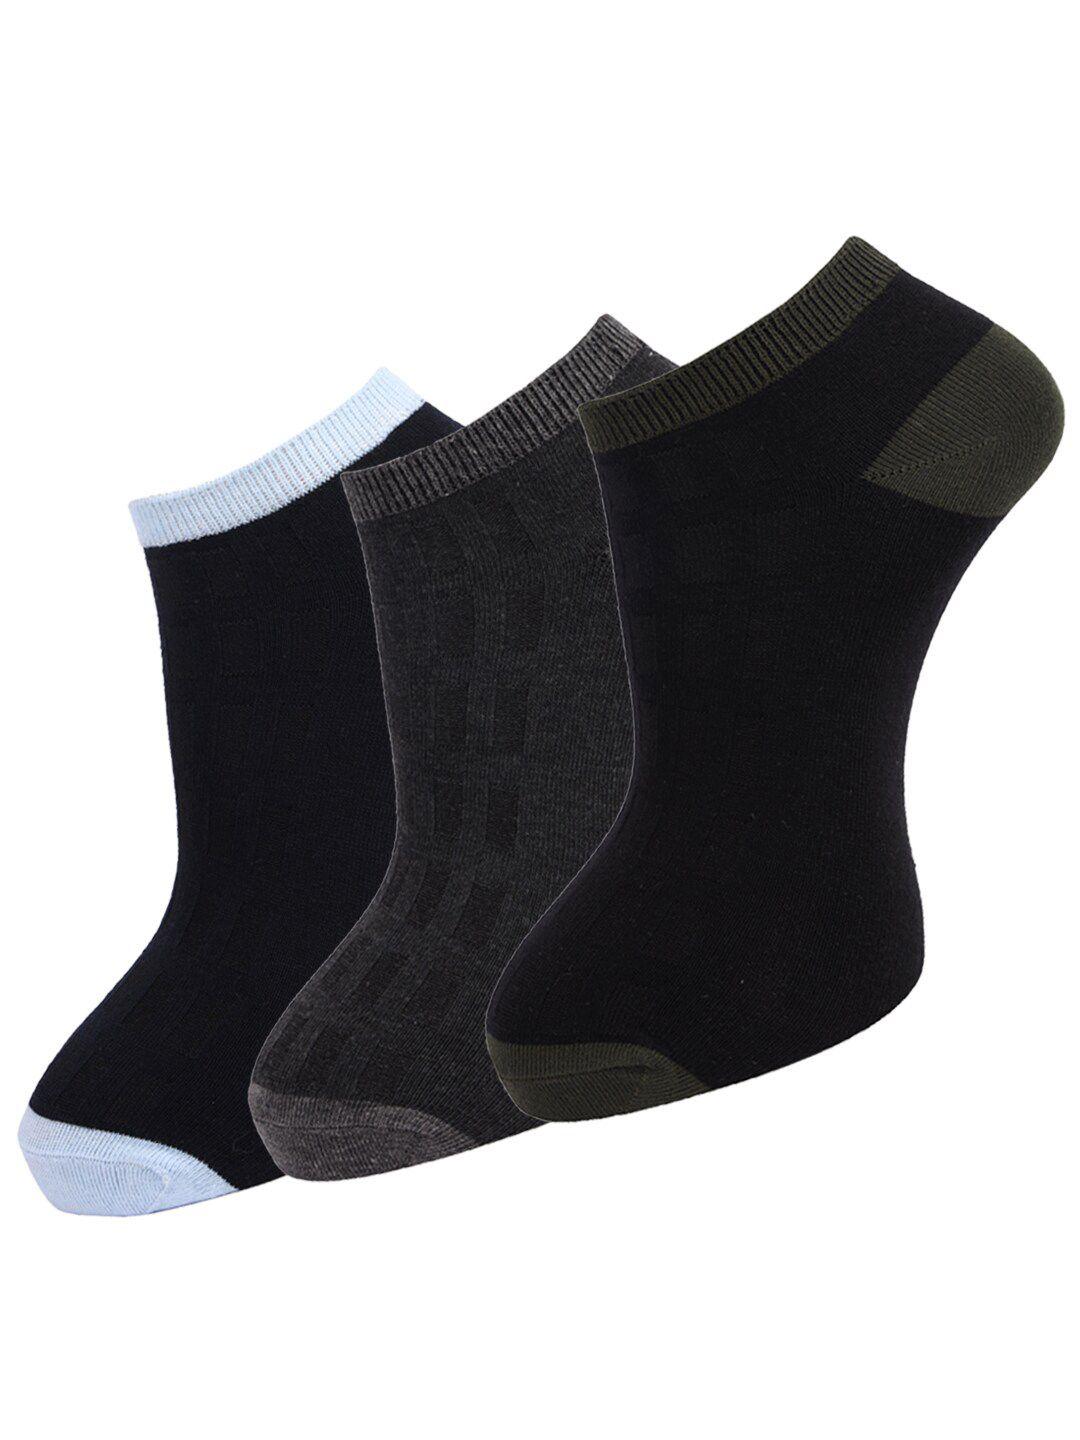 dollar socks men pack of 3 assorted ankle-length combed cotton socks